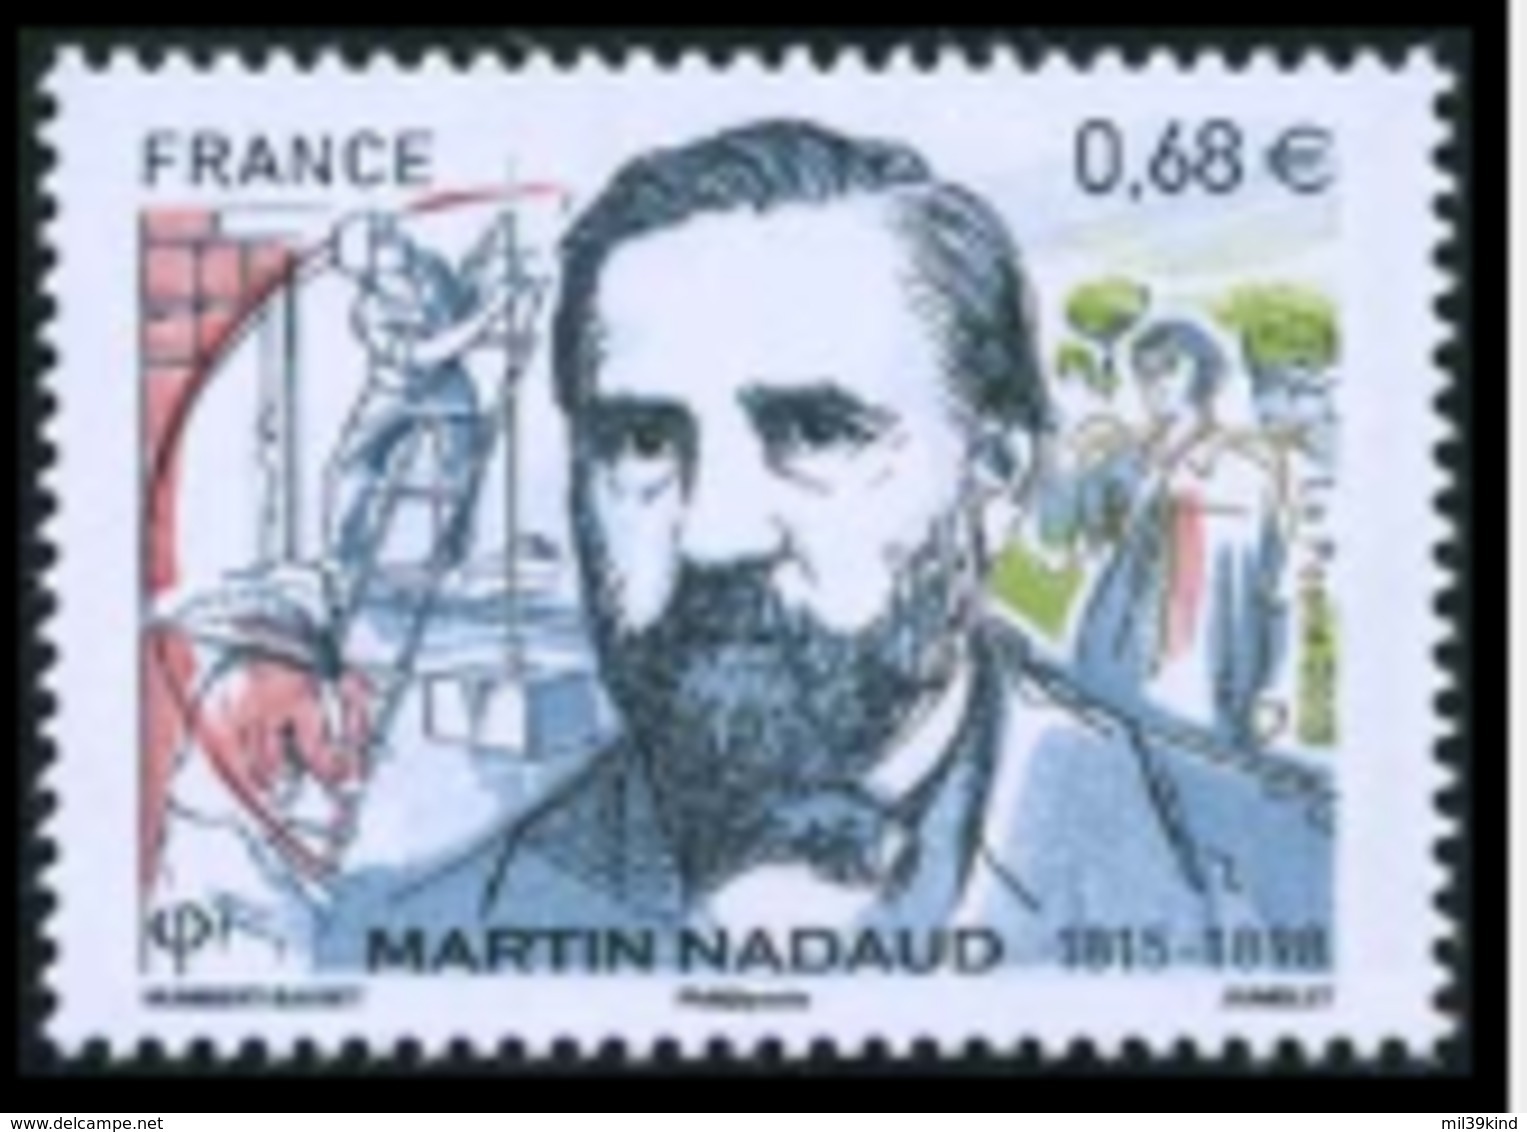 TIMBRE - FRANCE - 2015 - Martin Nadaud - Ongebruikt